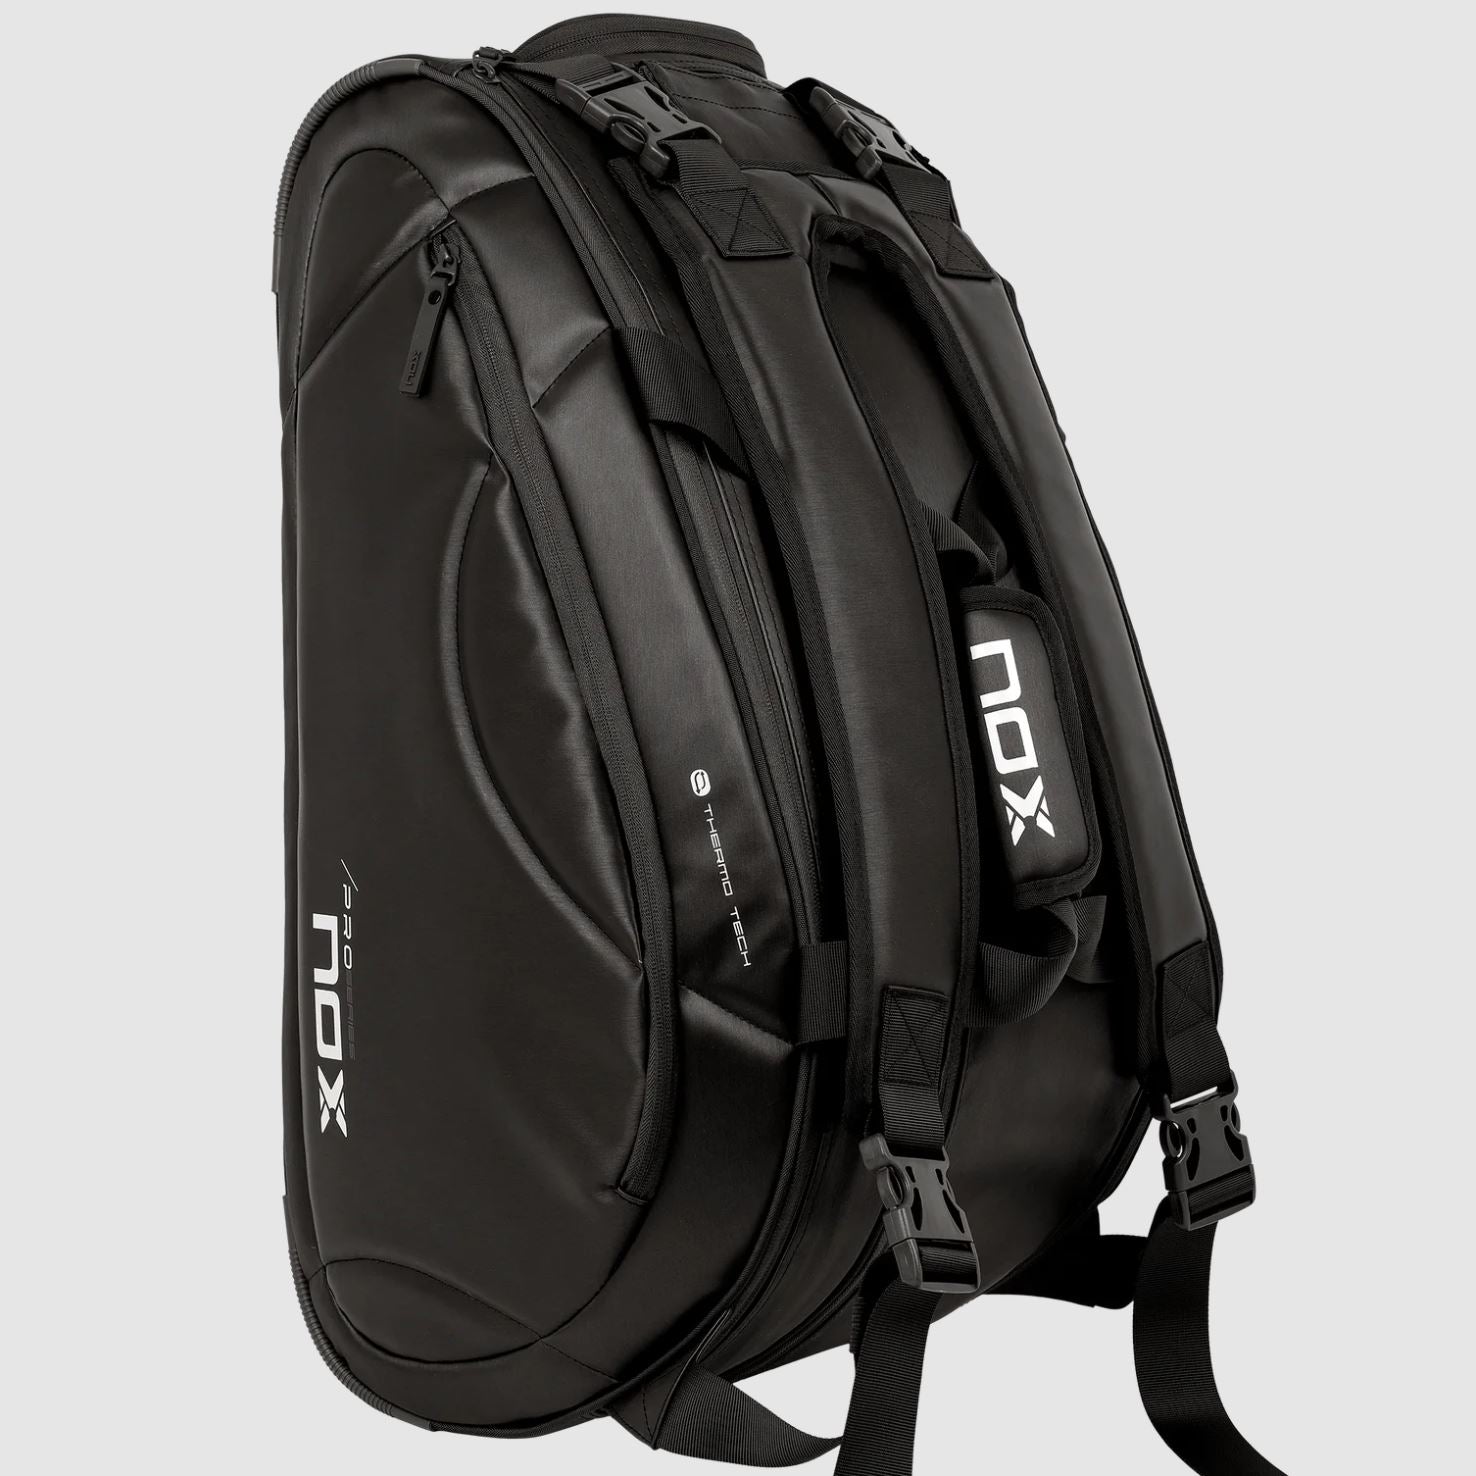 Nox Pro Series Padel Bag (Black)